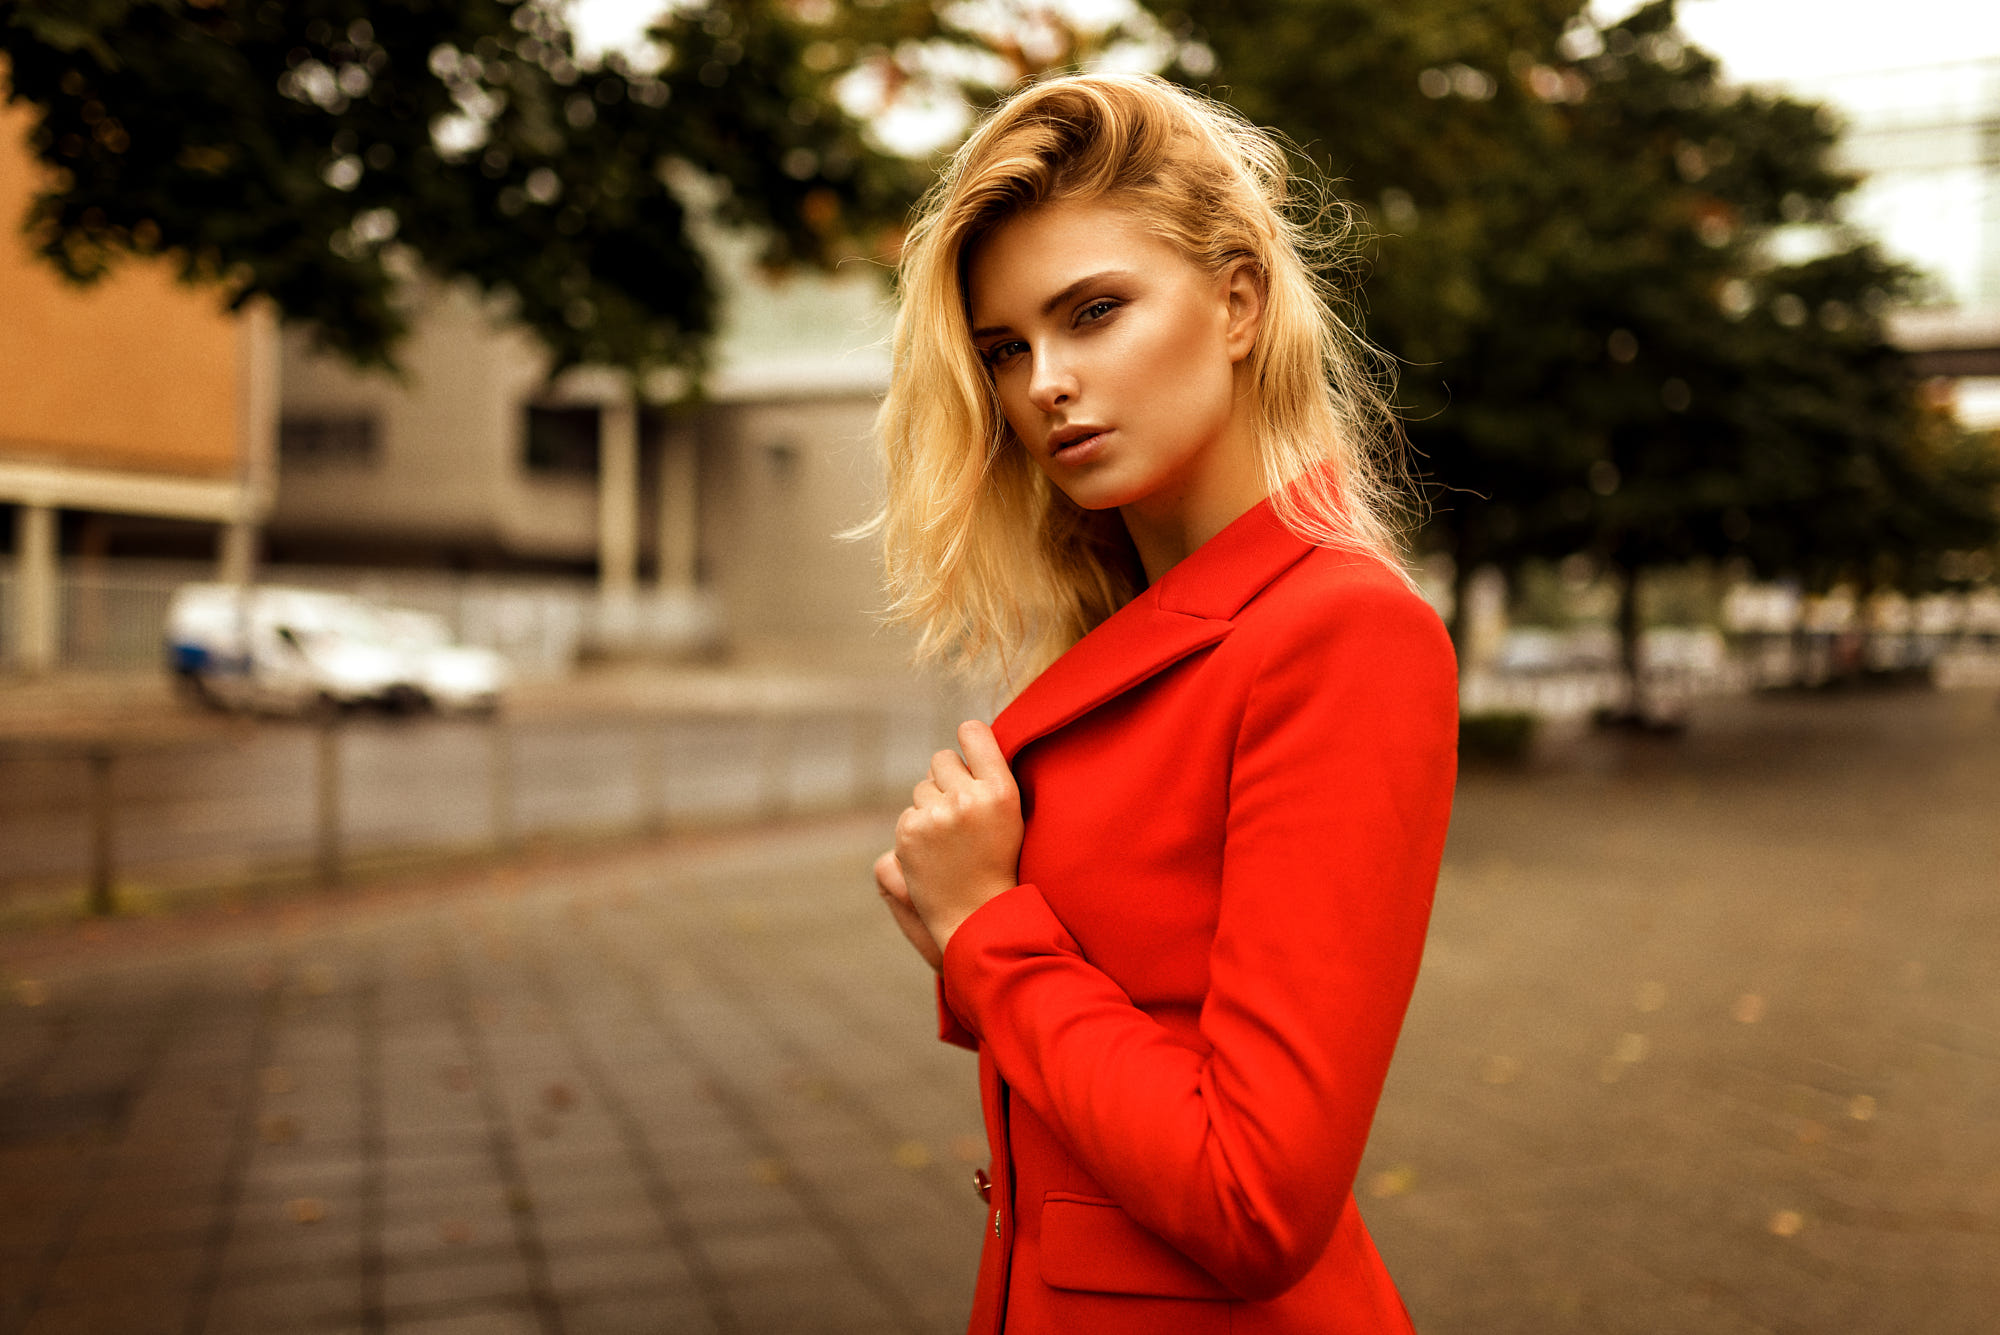 Women Blonde Face Women Outdoors Portrait Red Clothing Warm Colors City Bokeh Street Model Miro Hofm 2000x1335